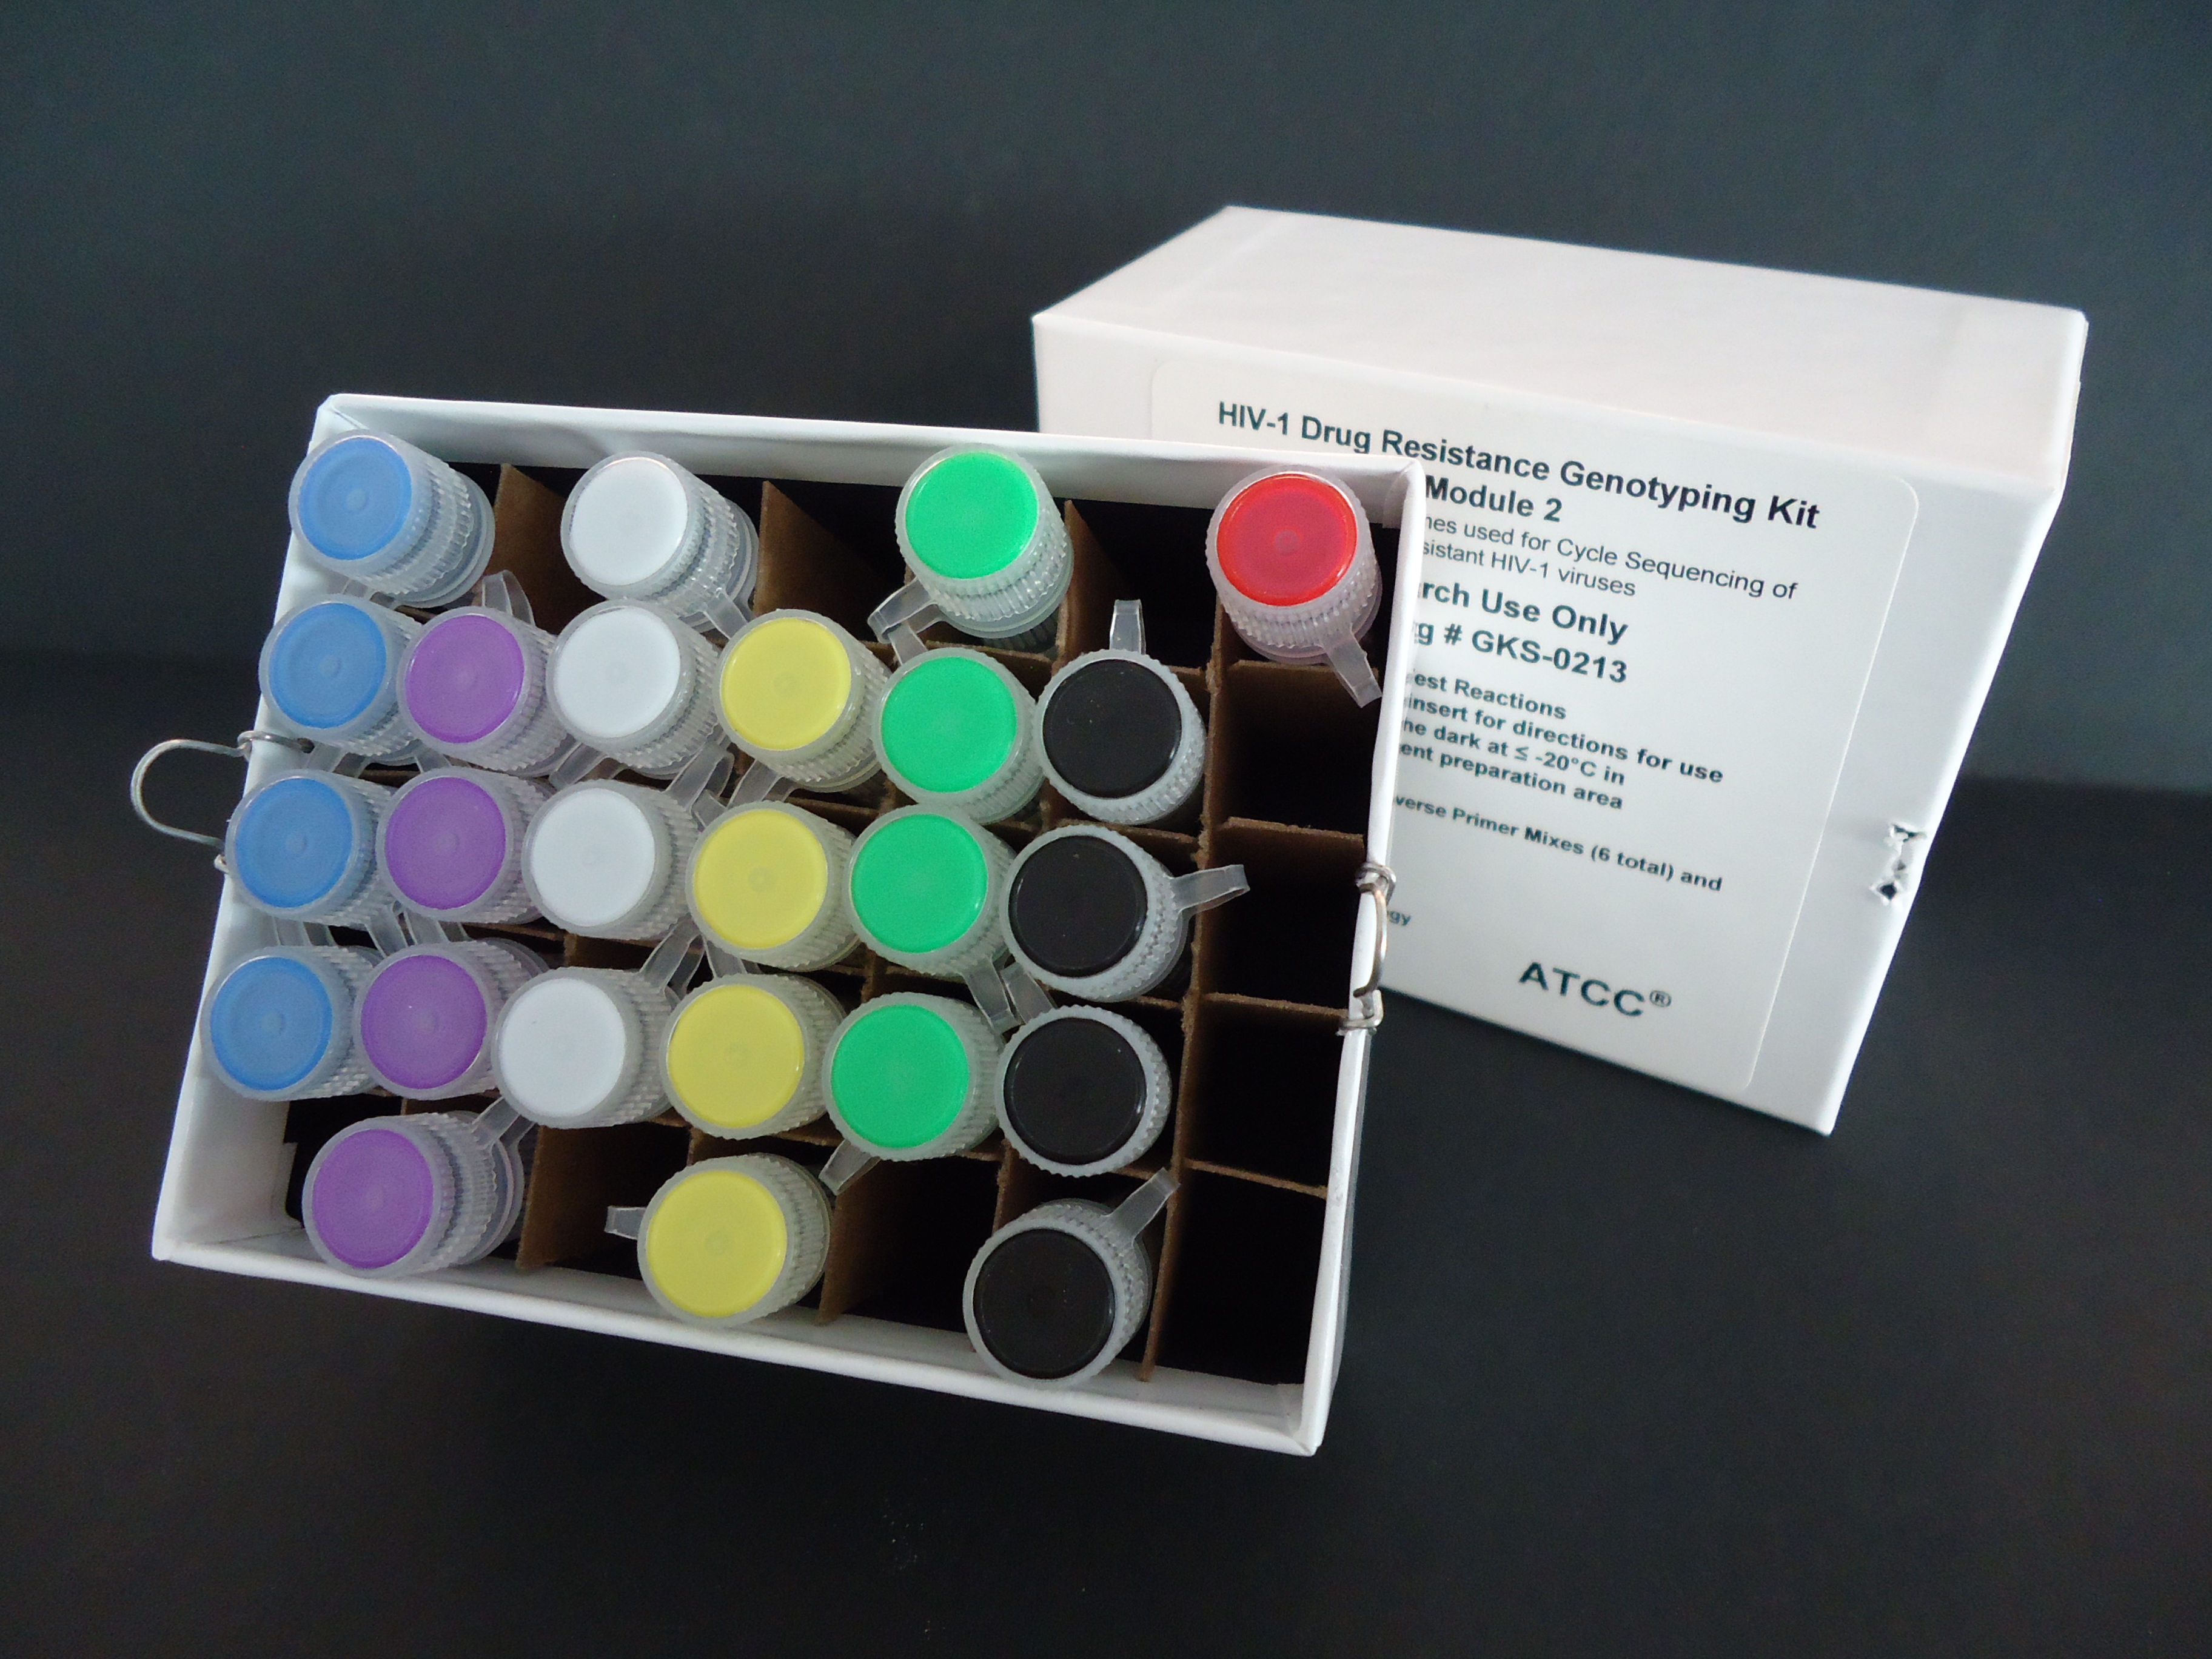 HIV-1 Drug Resistance Genotyping Kit Module 2, by ATCC